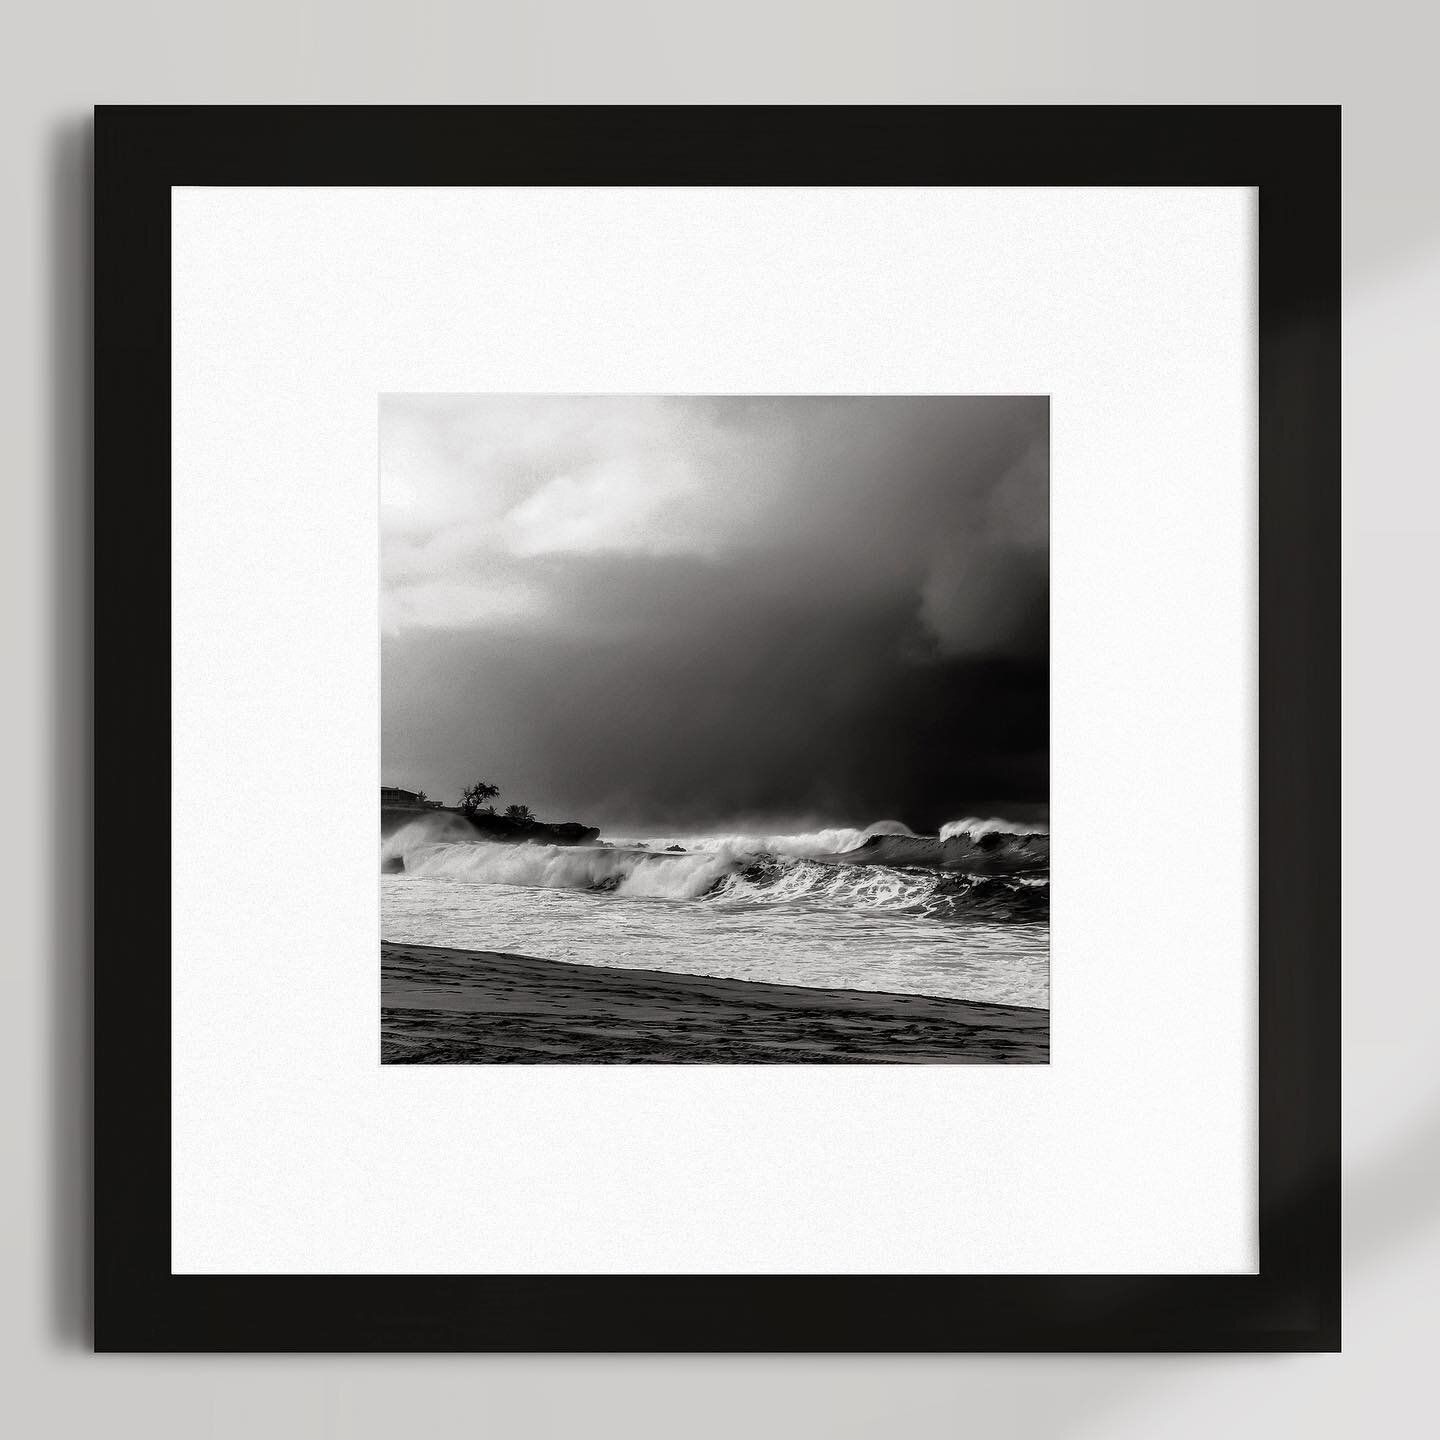 A 14x14in customized framed print of Waimea Bay, Hawaii 
-
#hawaii #waimea #waimeabay #prints #walldecor